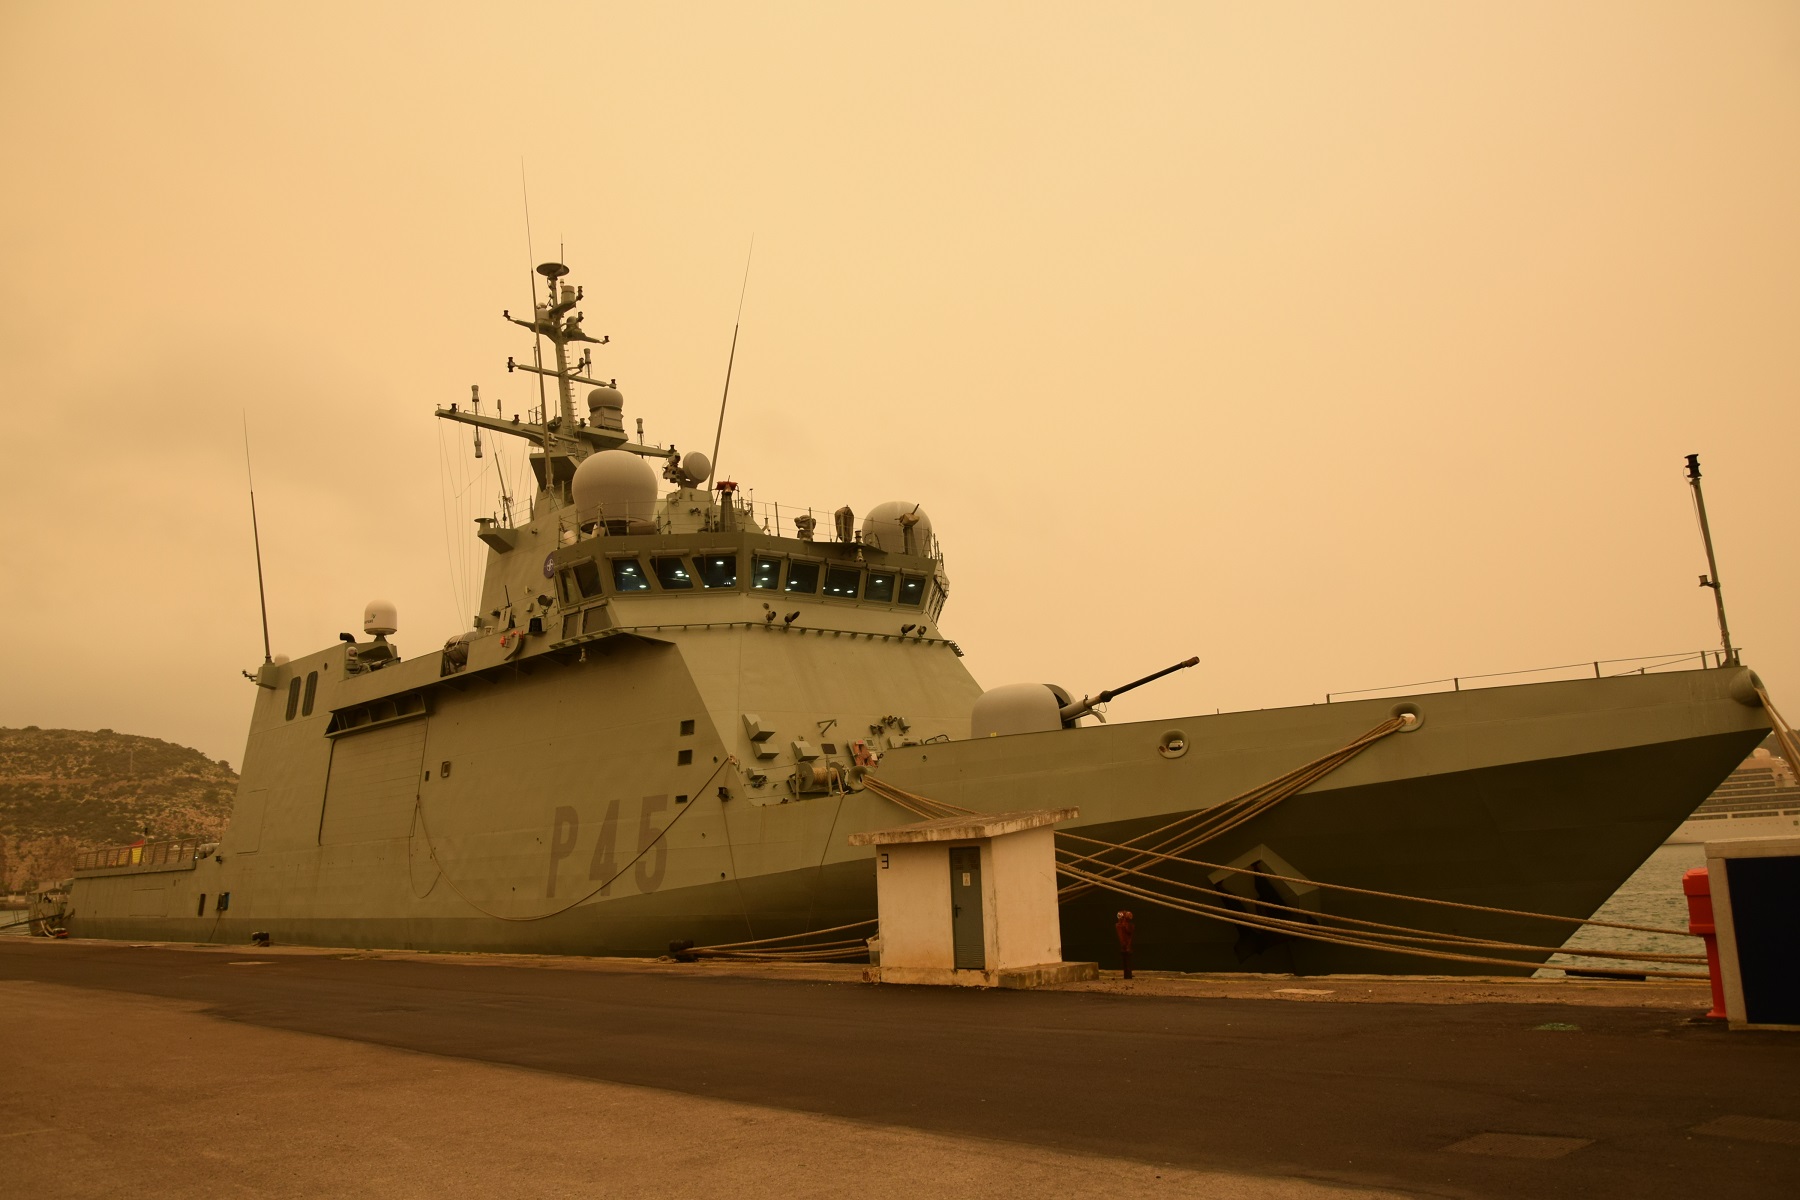 ESPS 'Audaz' docked in Cartagena